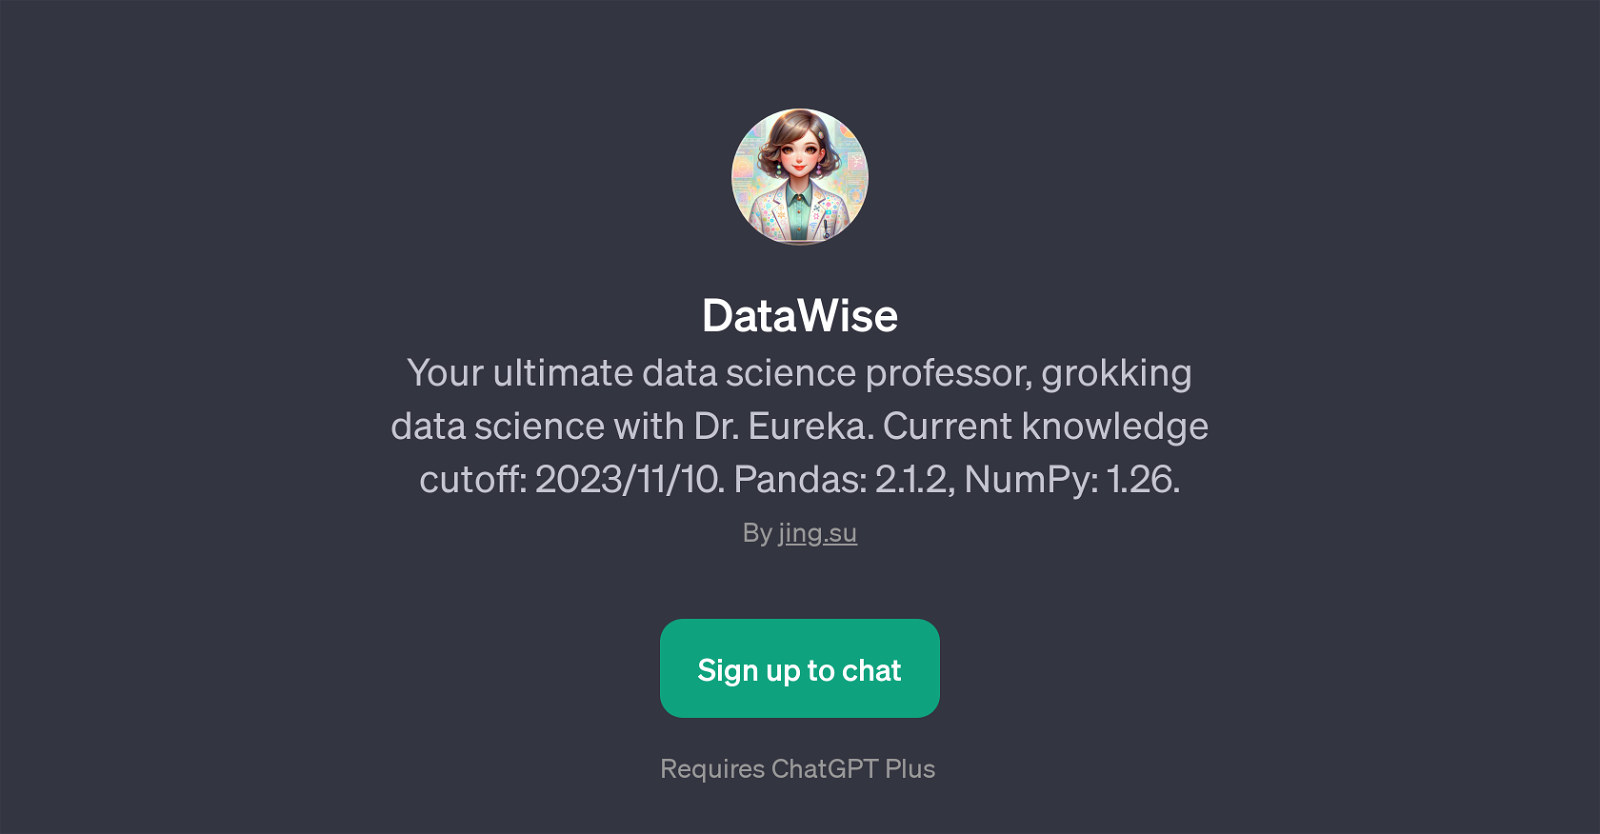 DataWise website